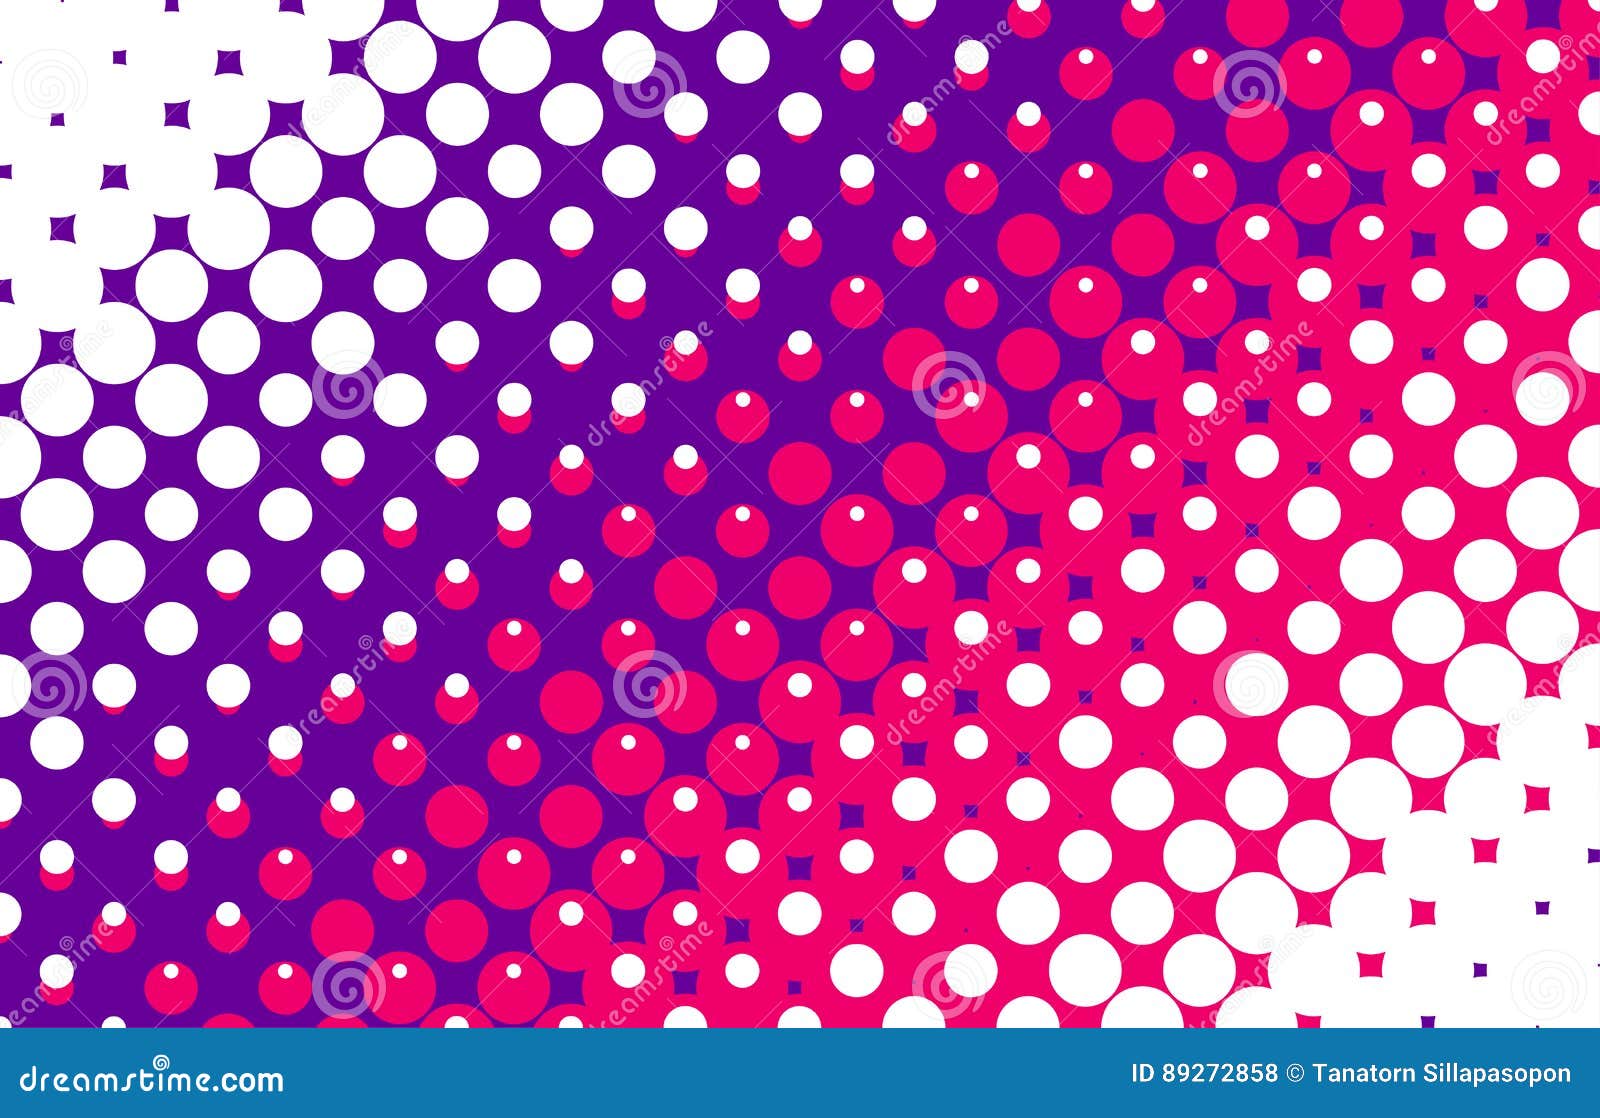 Abstract dots background stock illustration. Illustration of polka